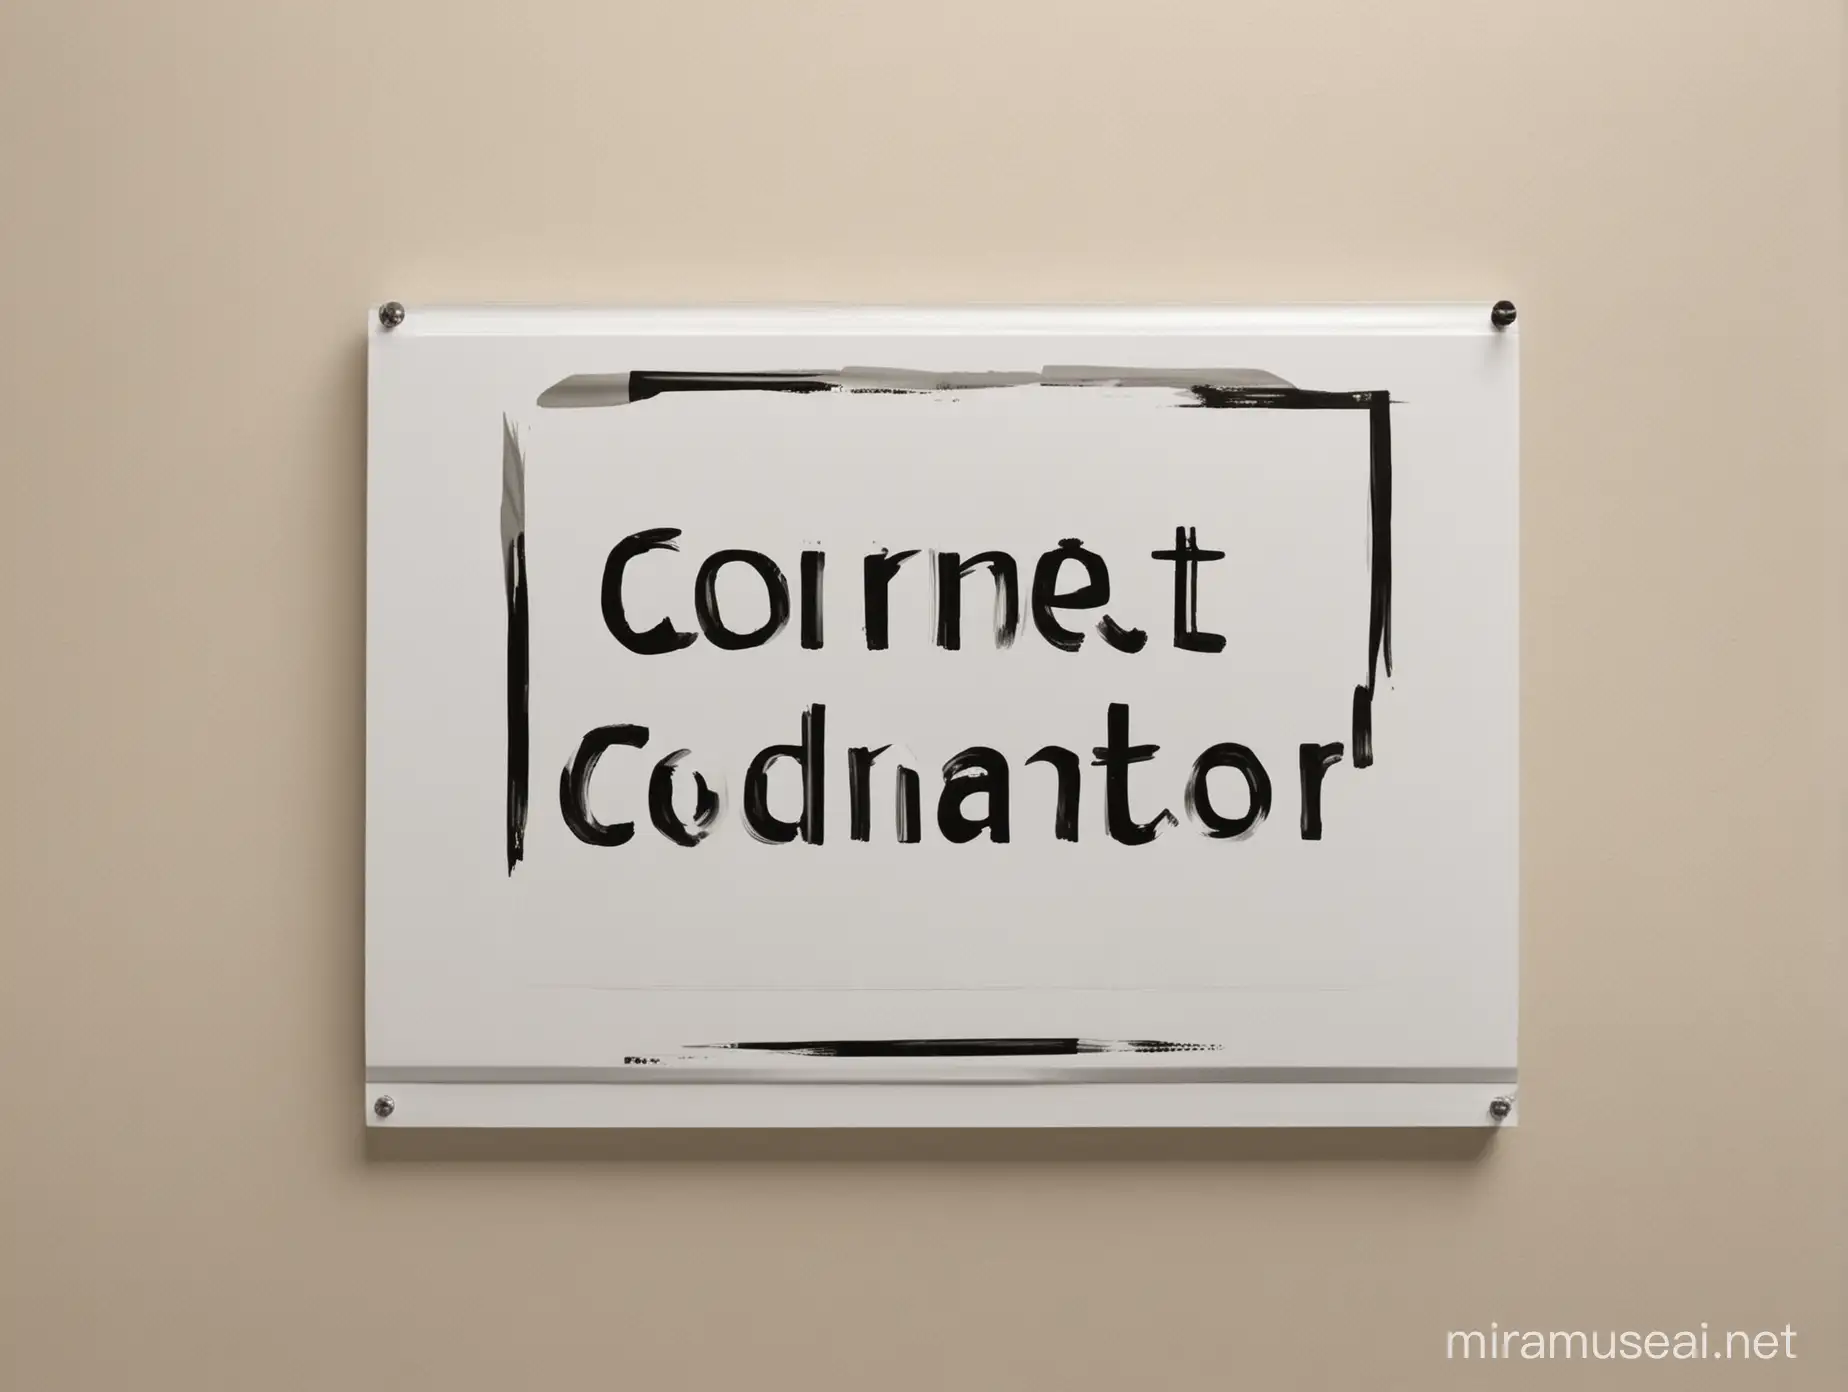 Connet Coordinator office worker sign